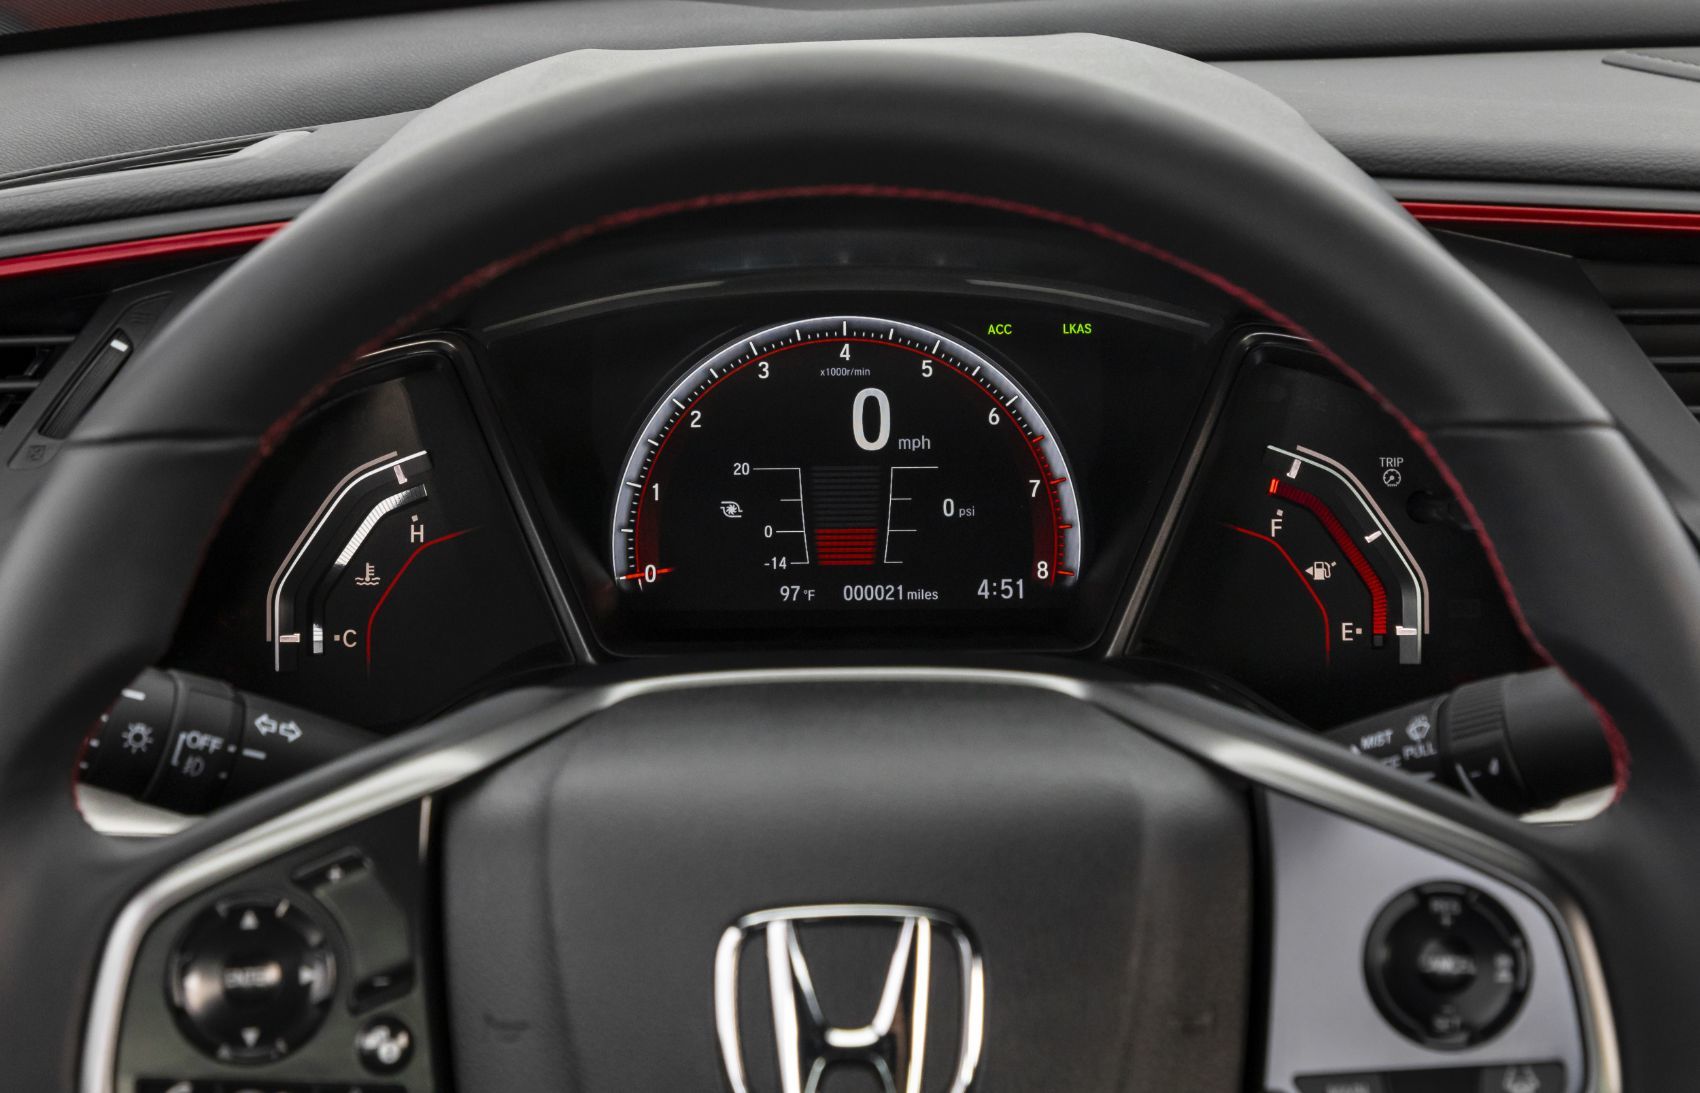 2020 Honda Civic Si Worthy Type R Alternative Offers More